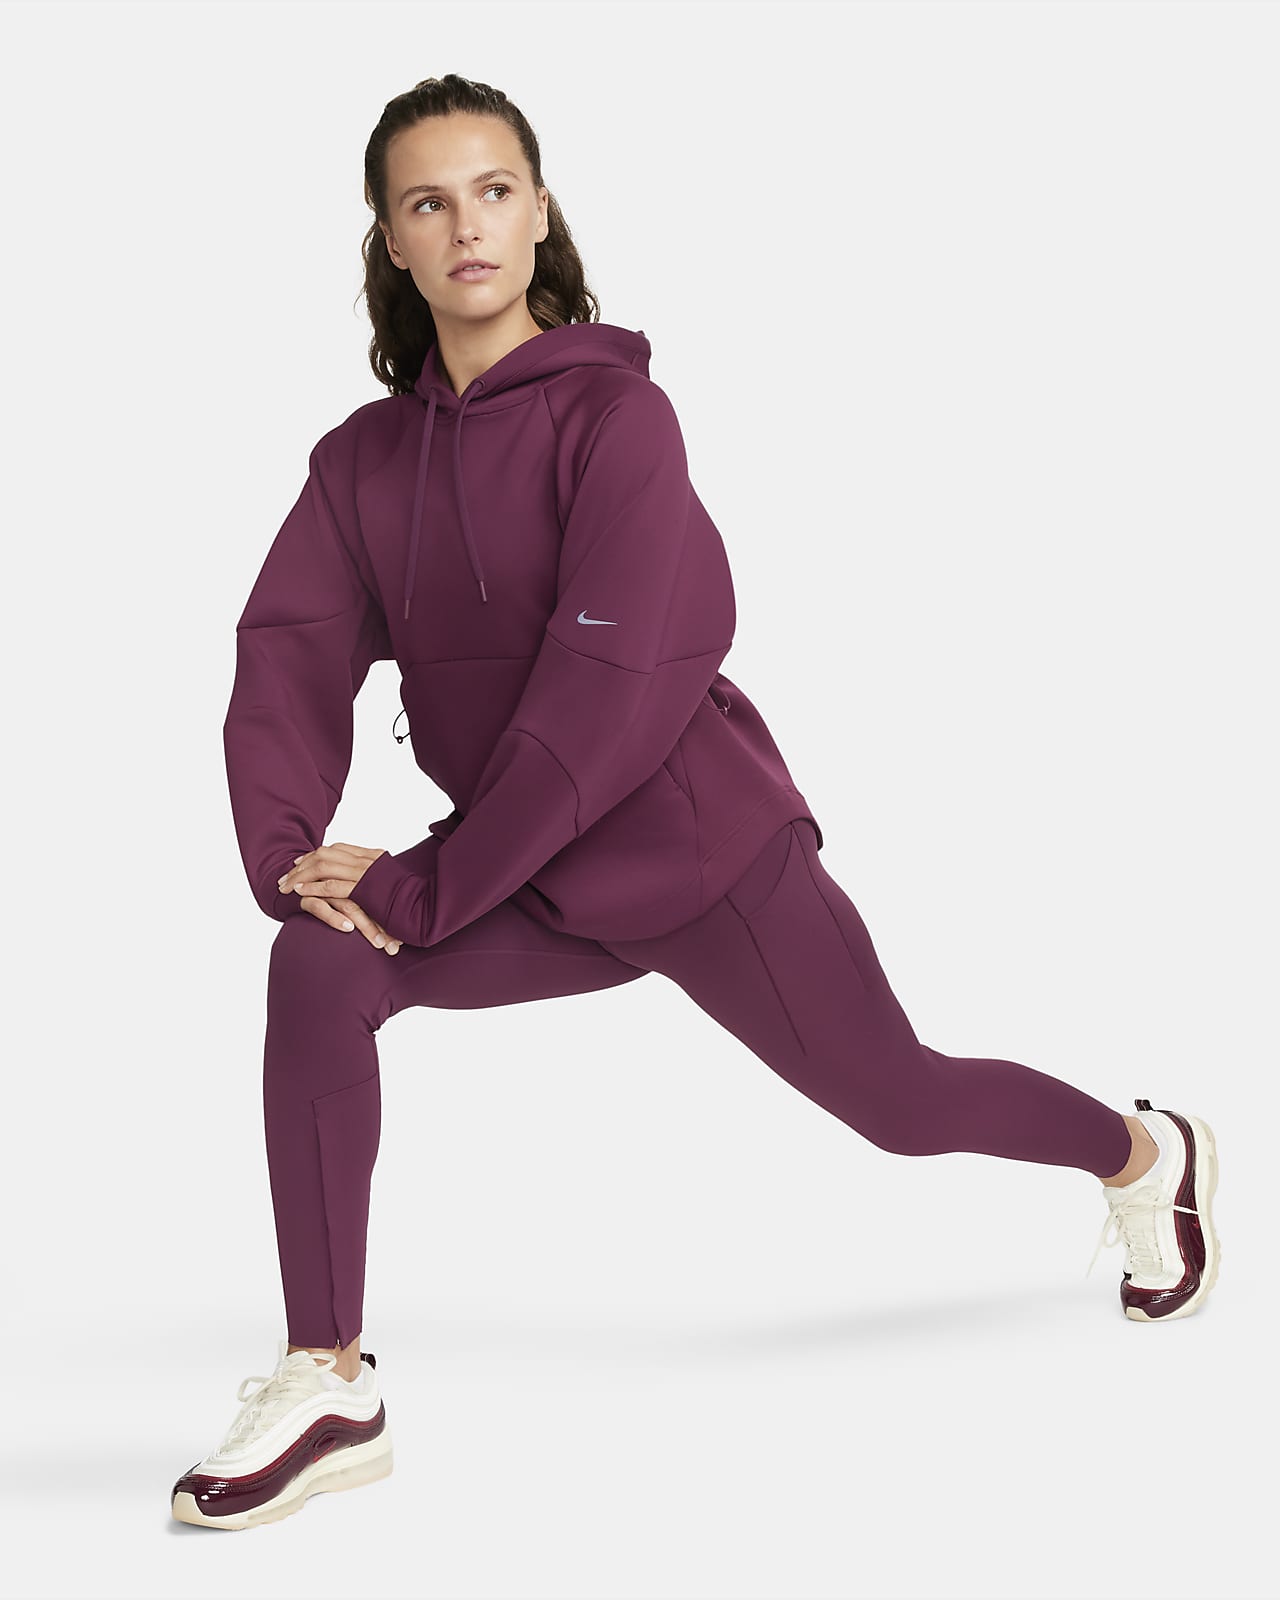 Nike Training Trousers Dri-FIT Get Fit - Burgundy/Black Women